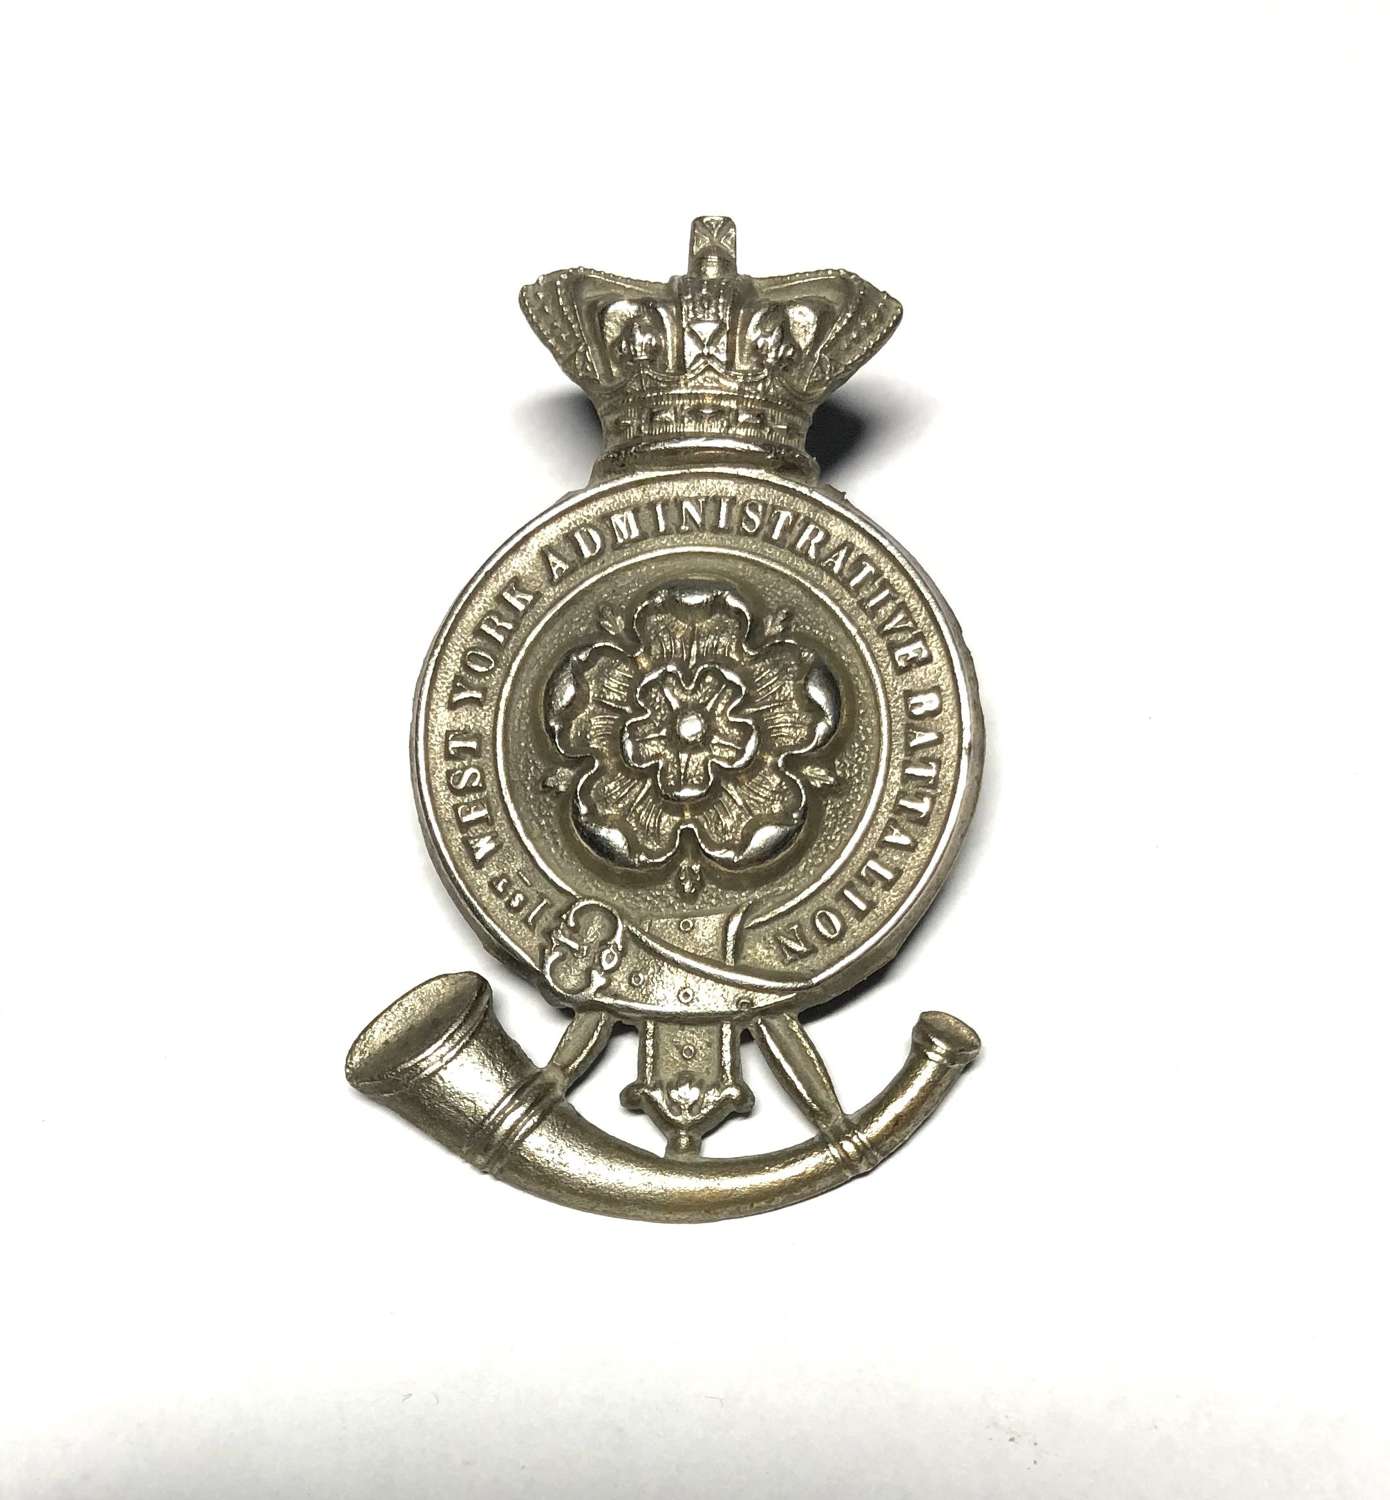 1st West York Administrative Battalion Victorian glengarry badge